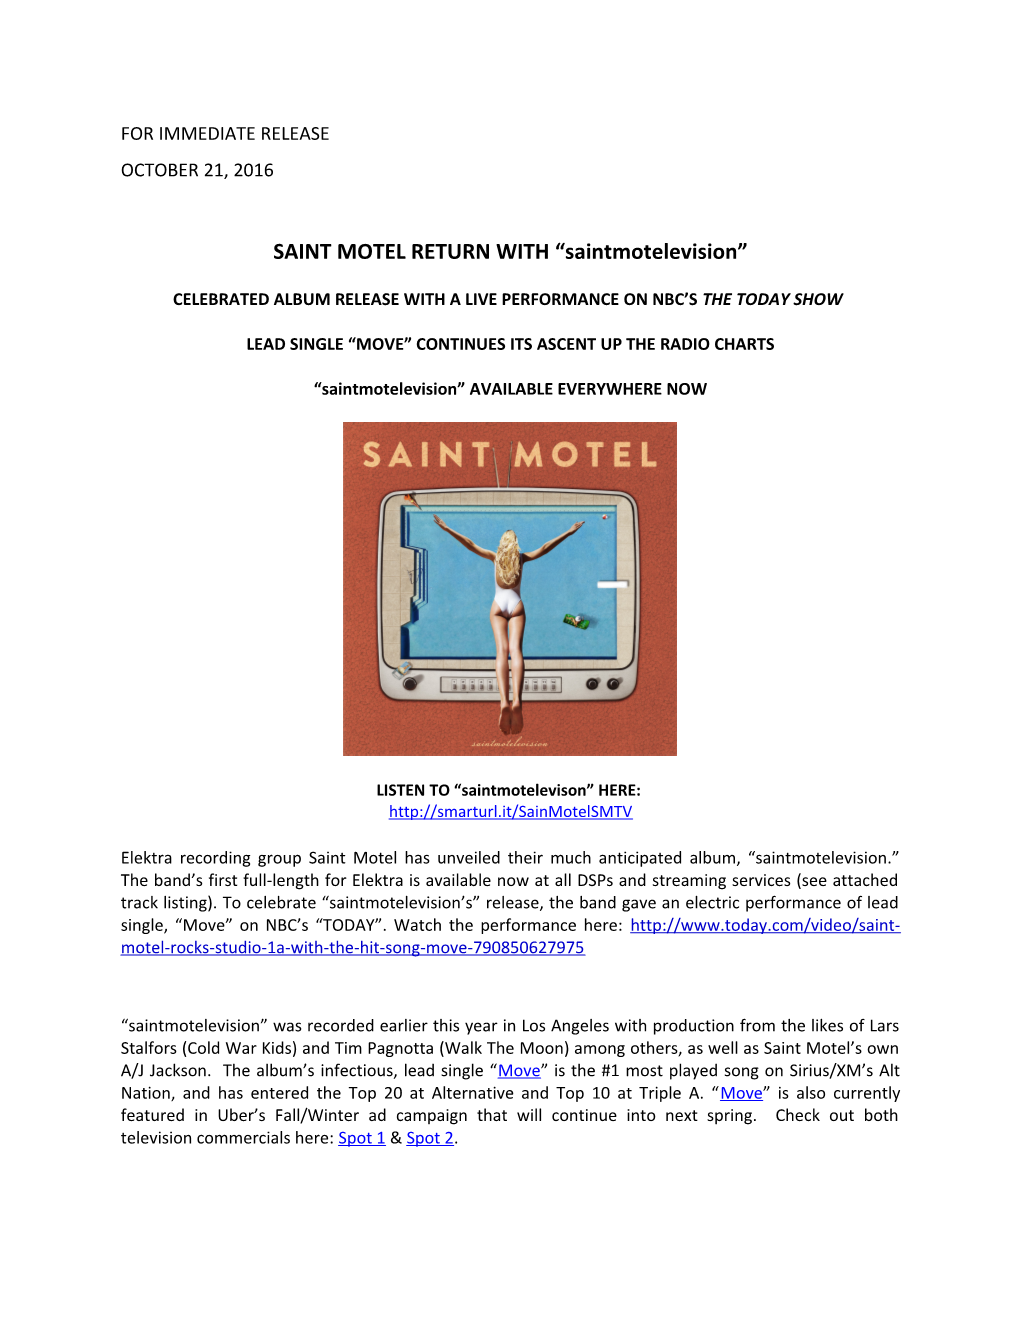 SAINT MOTEL RETURN with Saintmotelevision